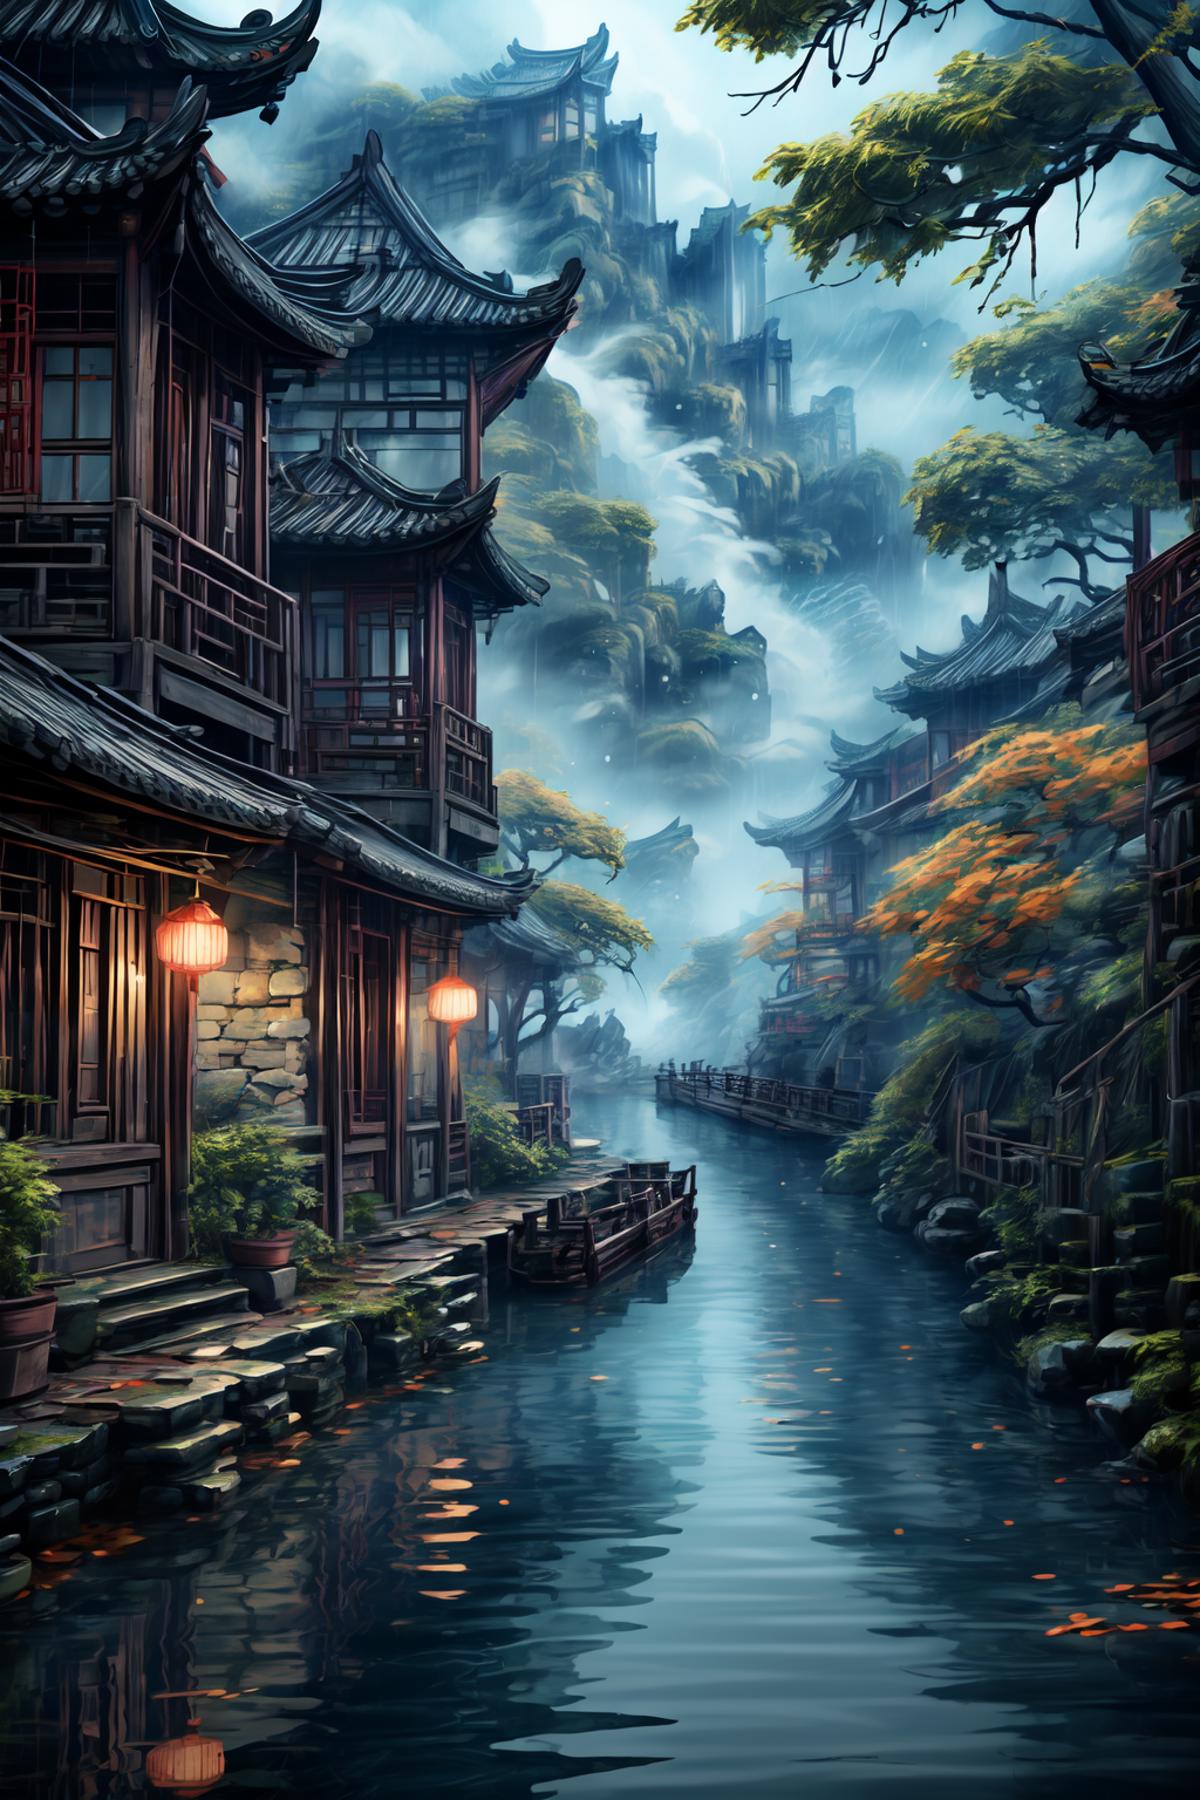 绪儿-水乡场景 Water town scene image by SecretEGGNOG